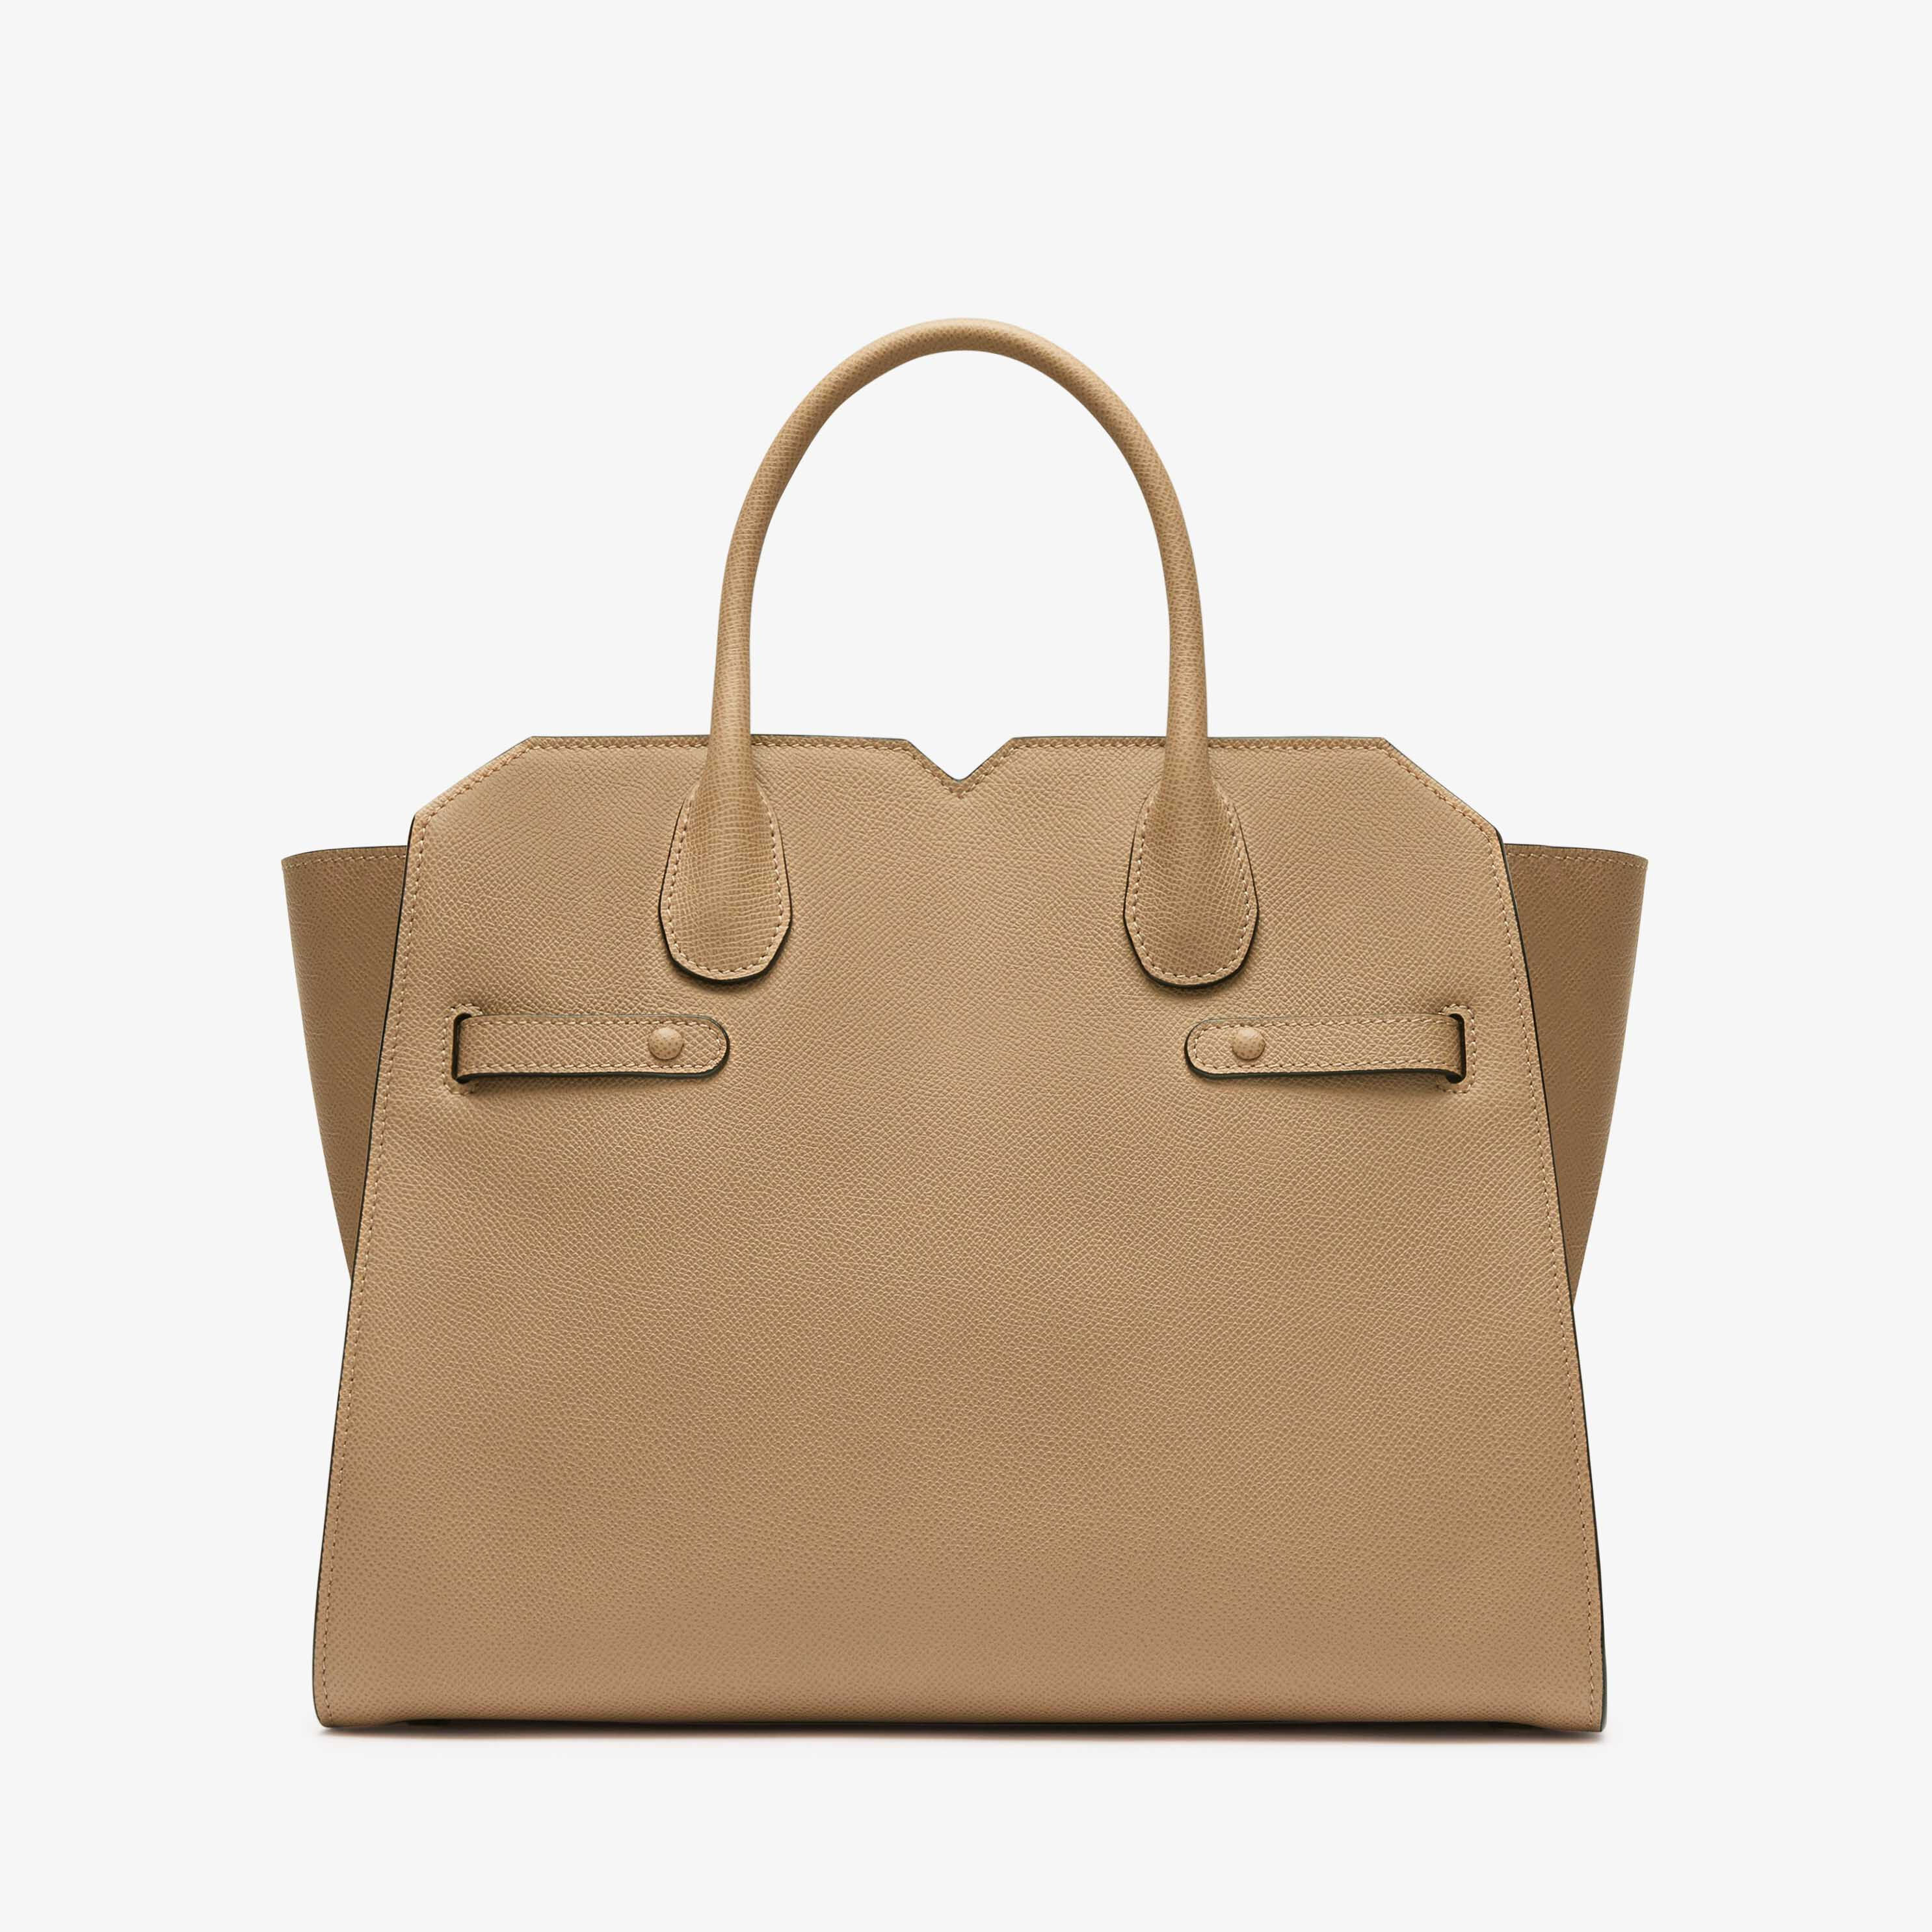 Made in Italy leather handbags, Men & Women's purses | Valextra